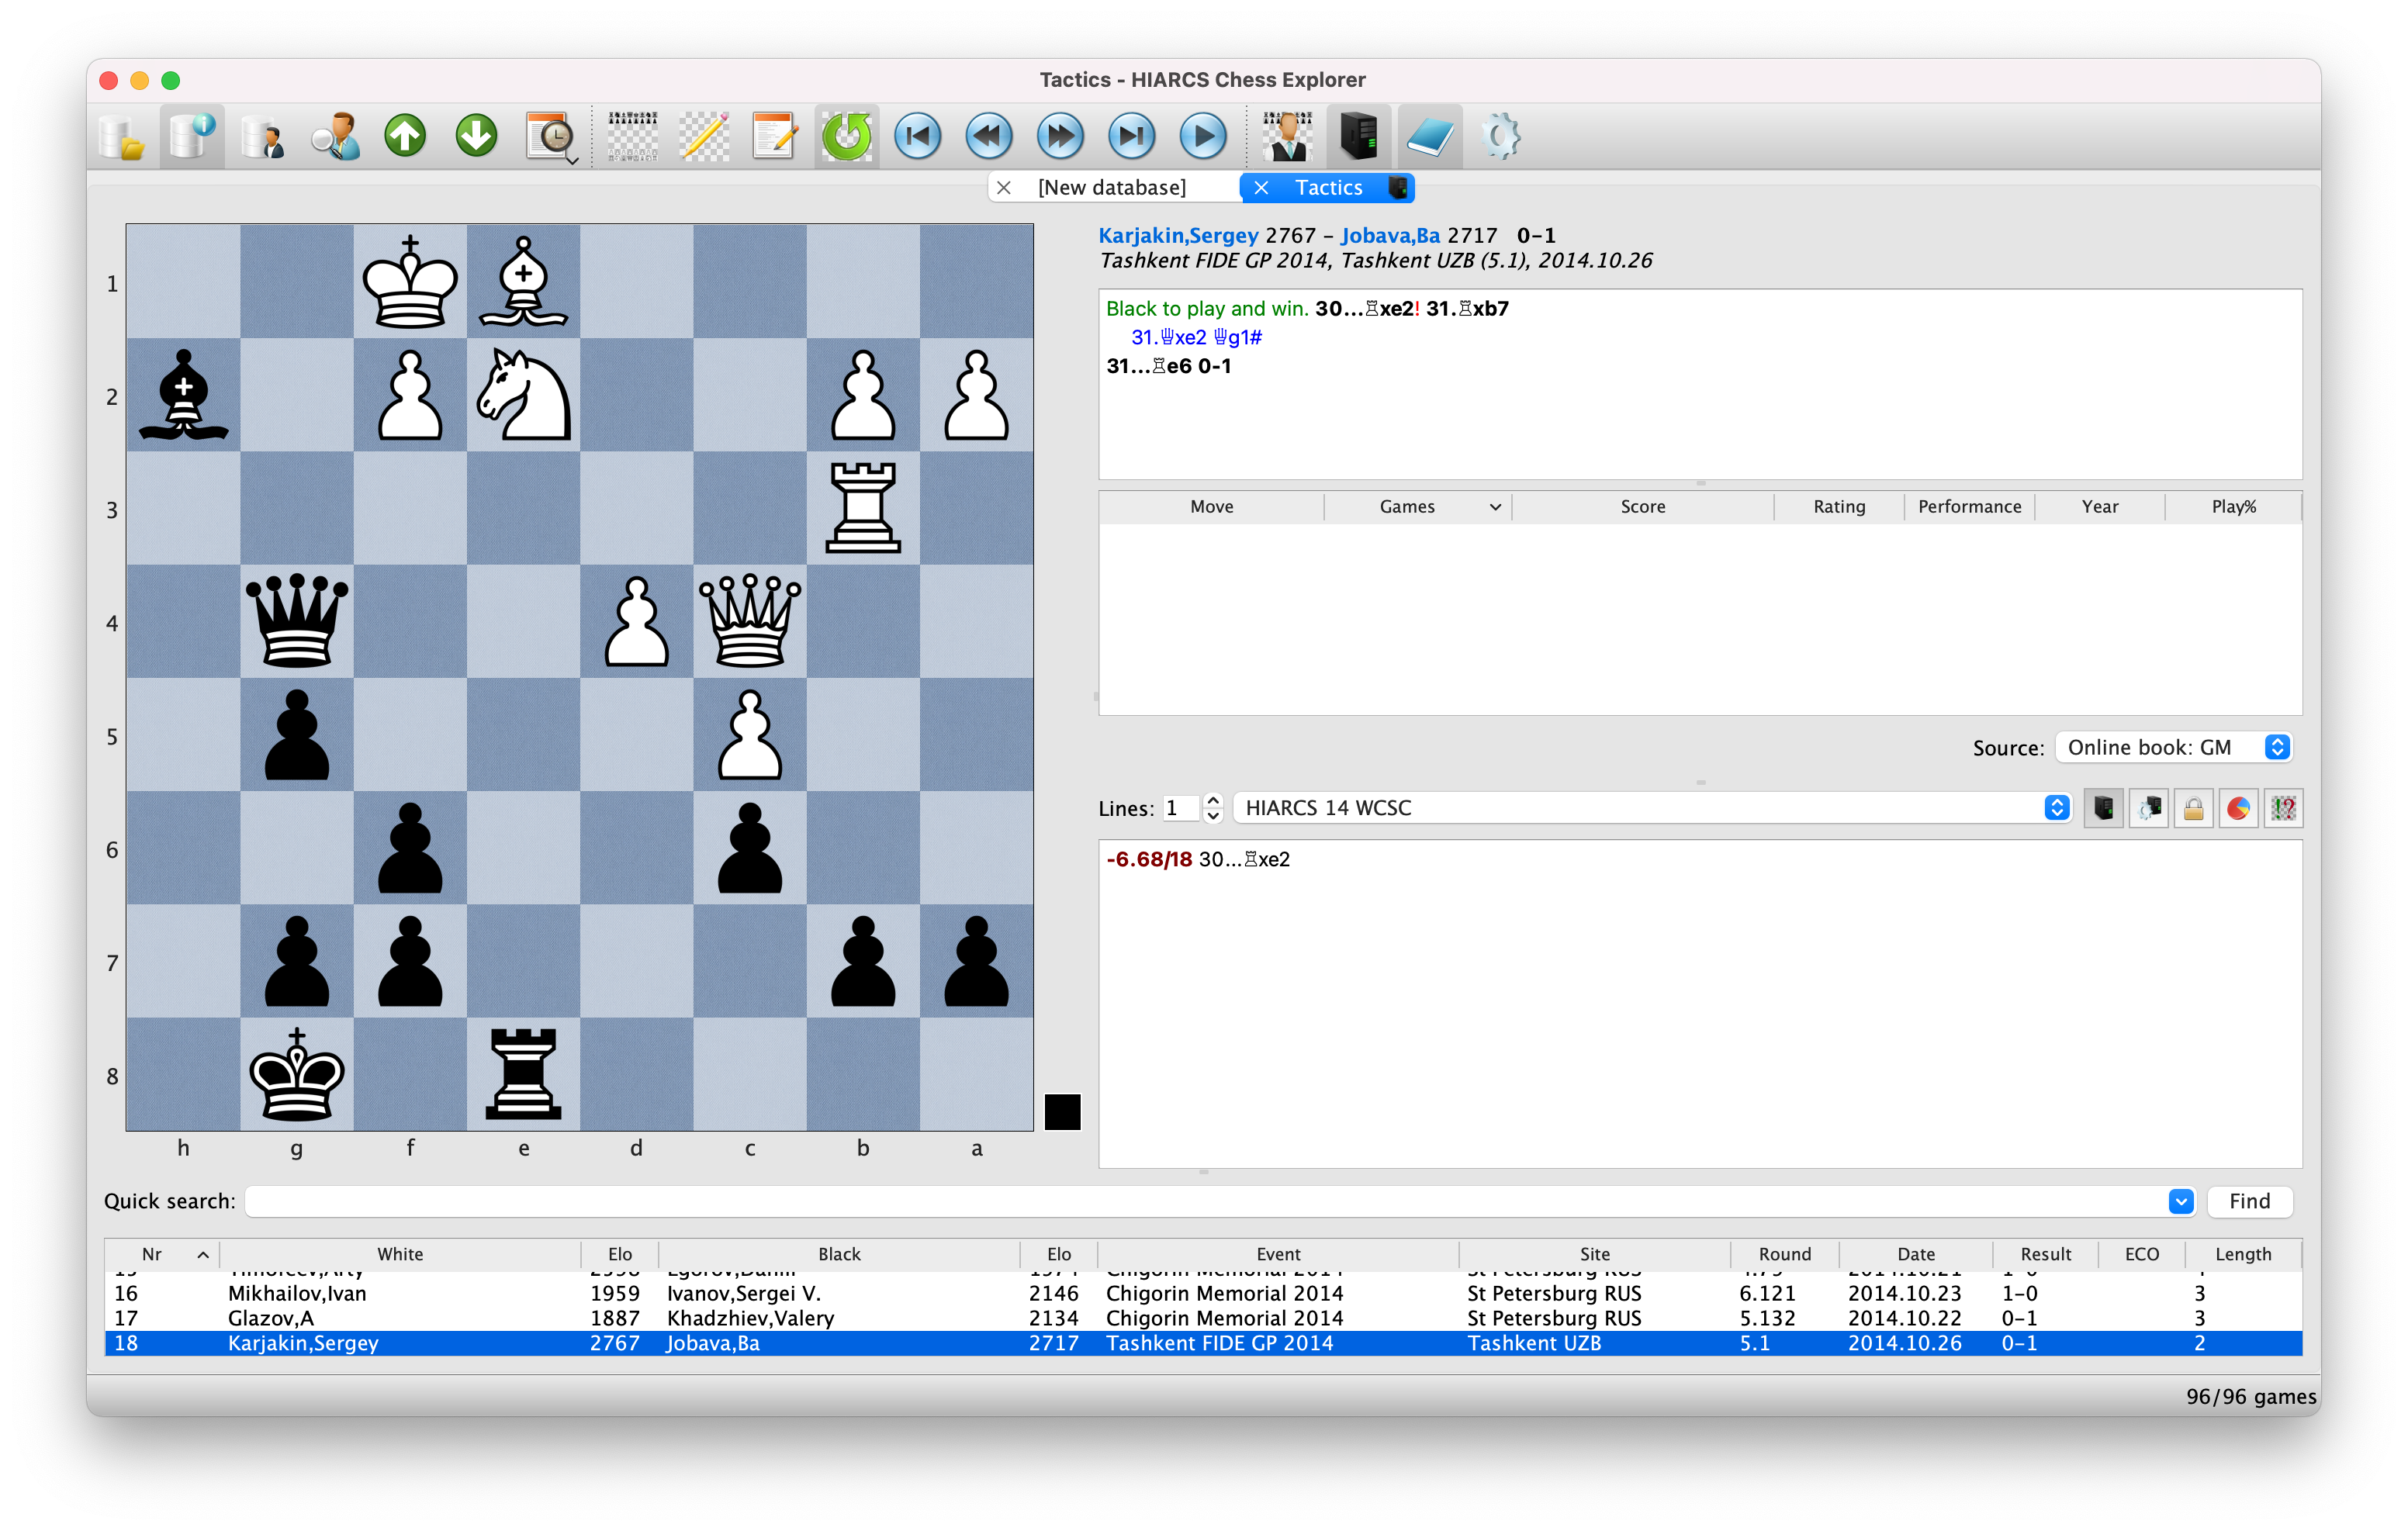 deep hiarcs chess explorer free download torrent